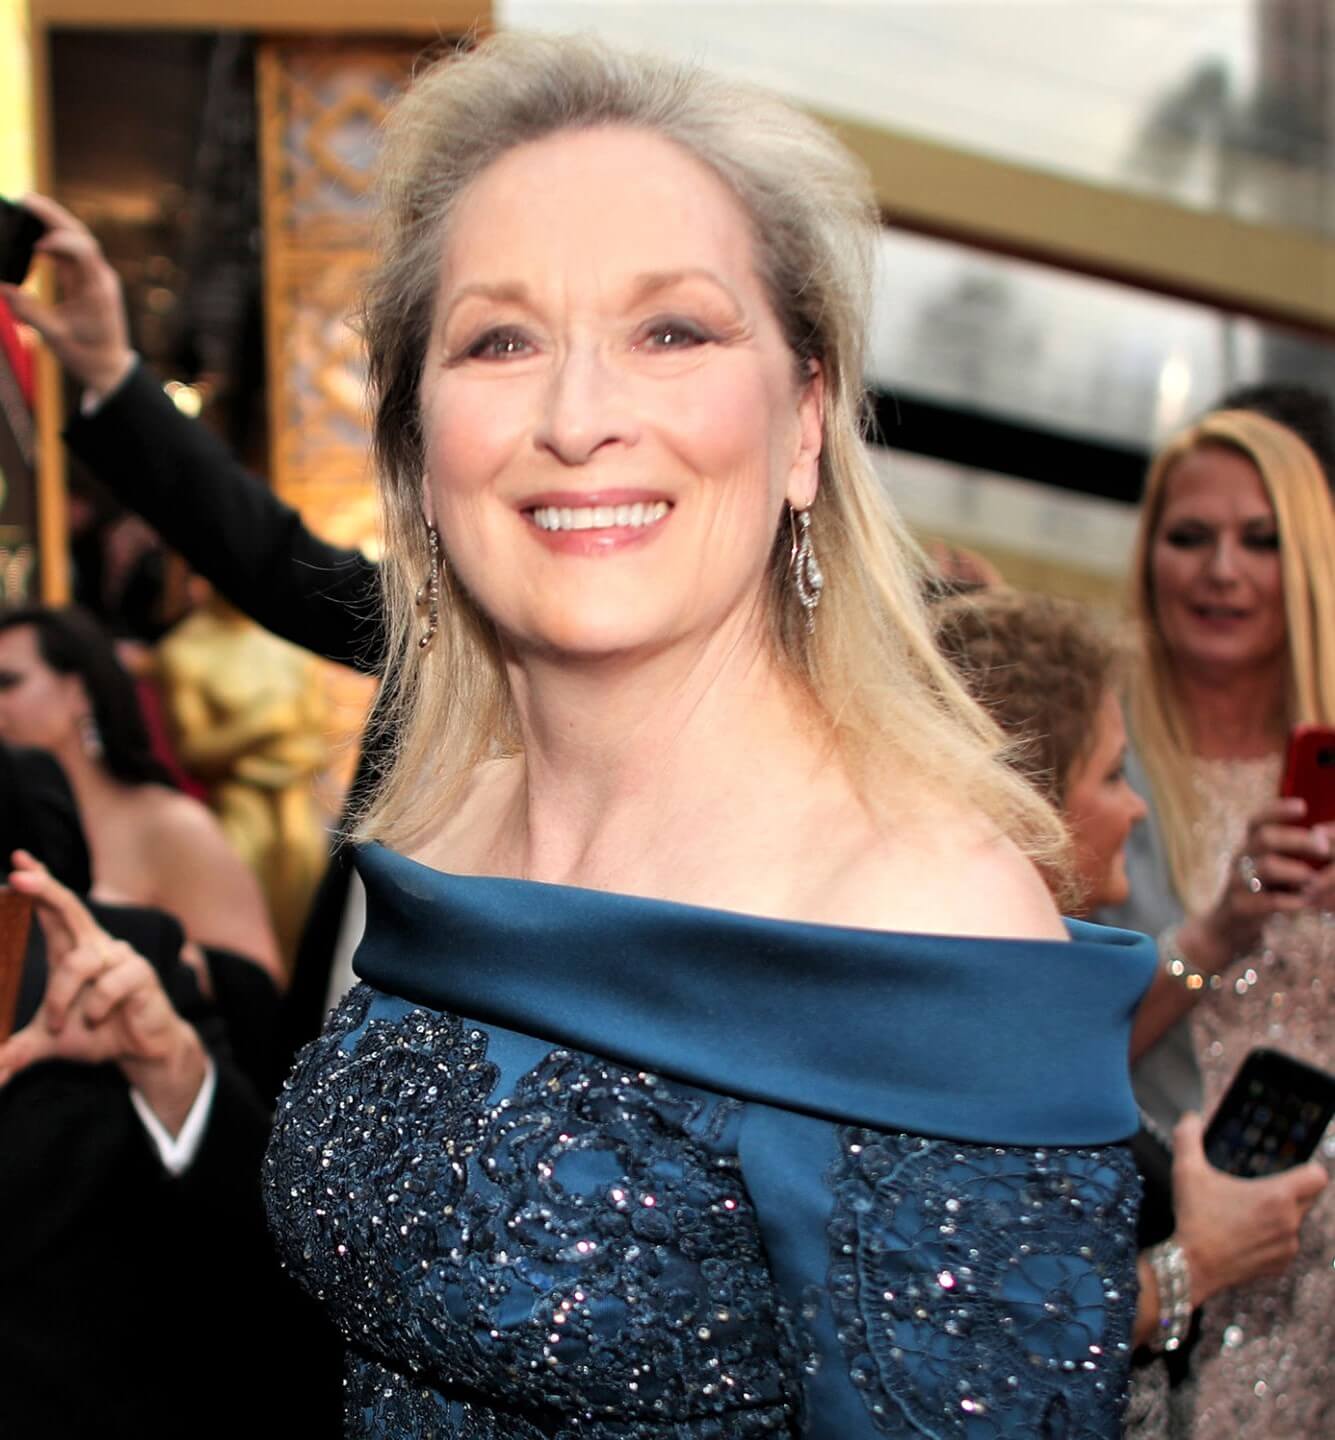 celebrities who prove aging Meryl Streep